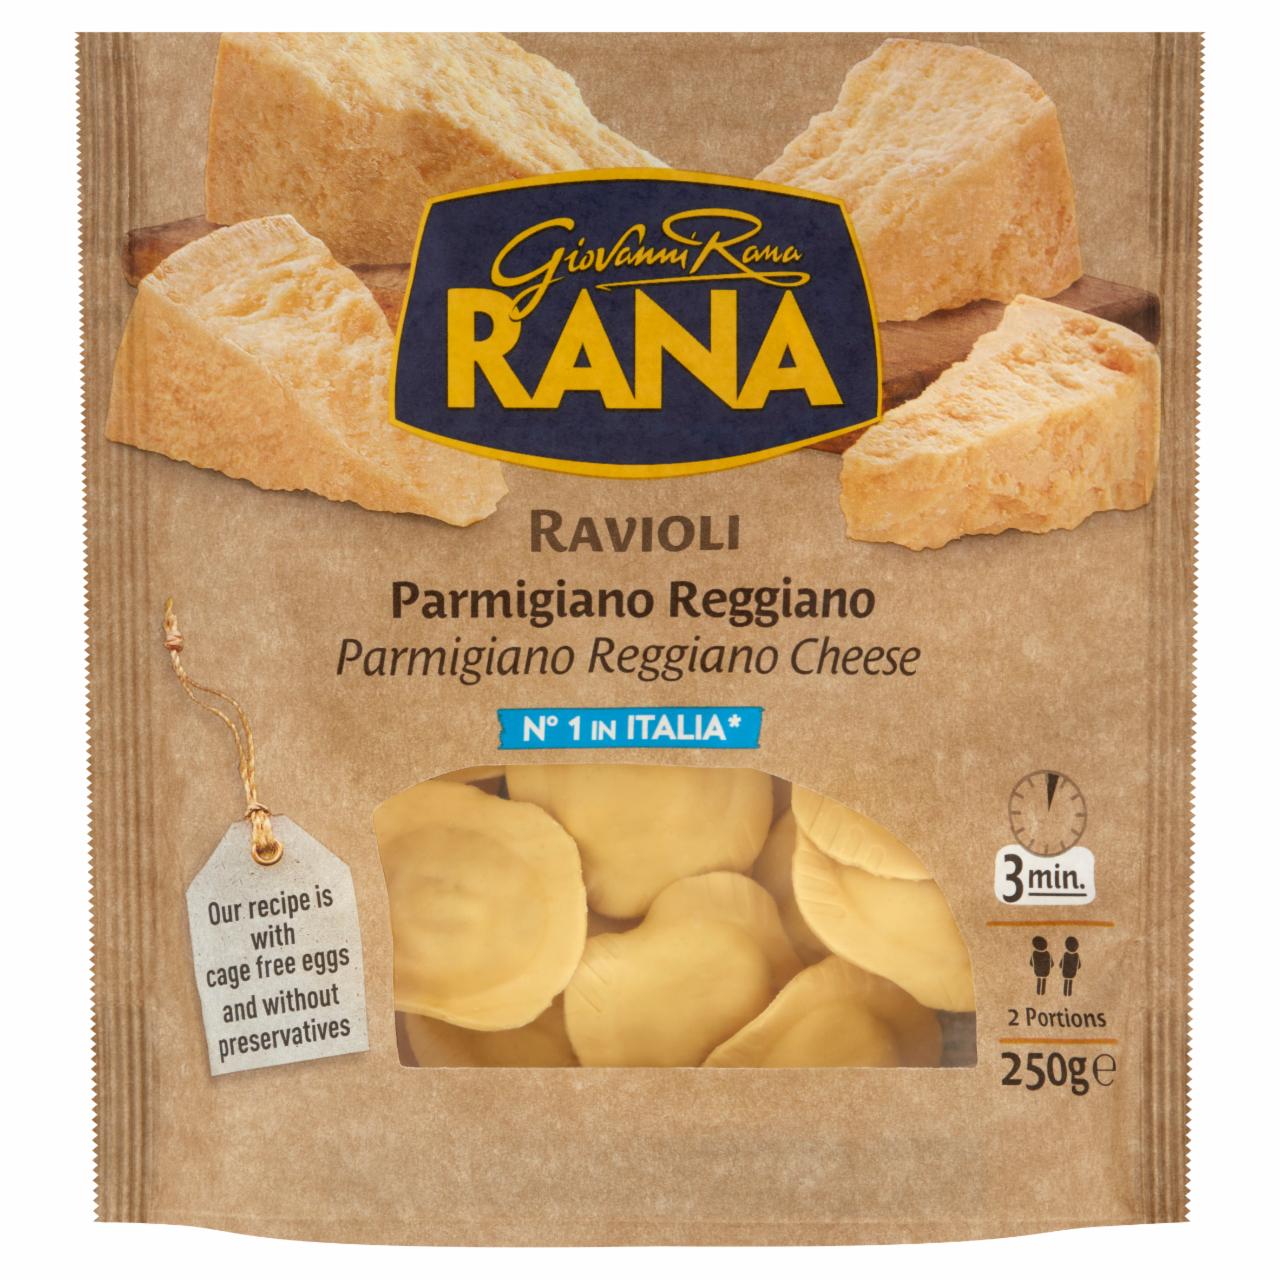 Fotografie - Ravioli Parmigiano Reggiano Cheese Rana